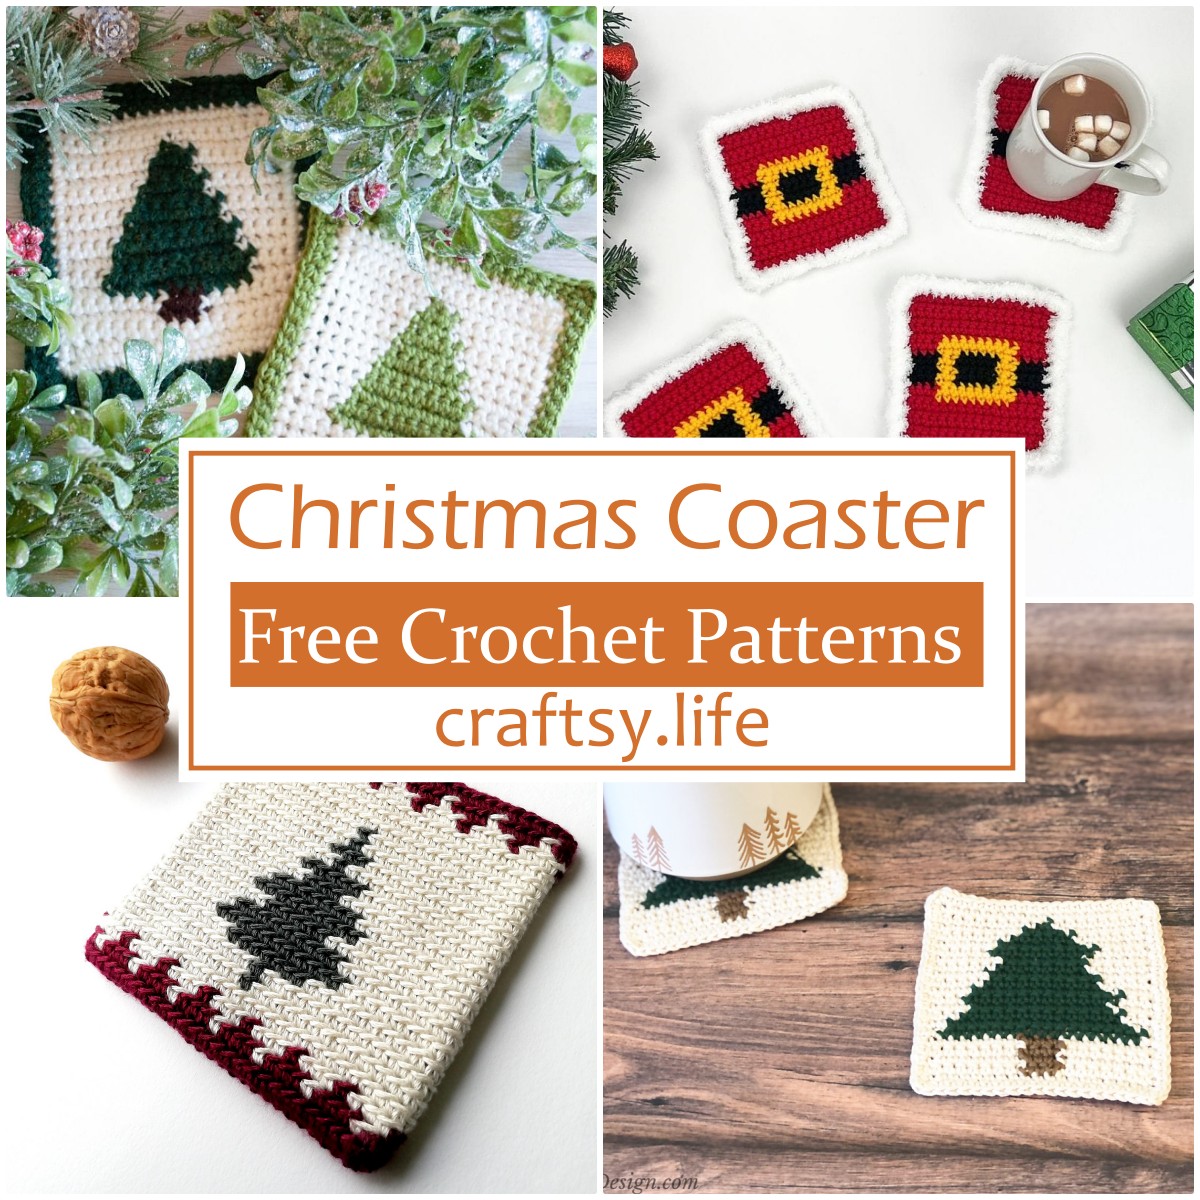 Crochet Christmas Coaster Patterns